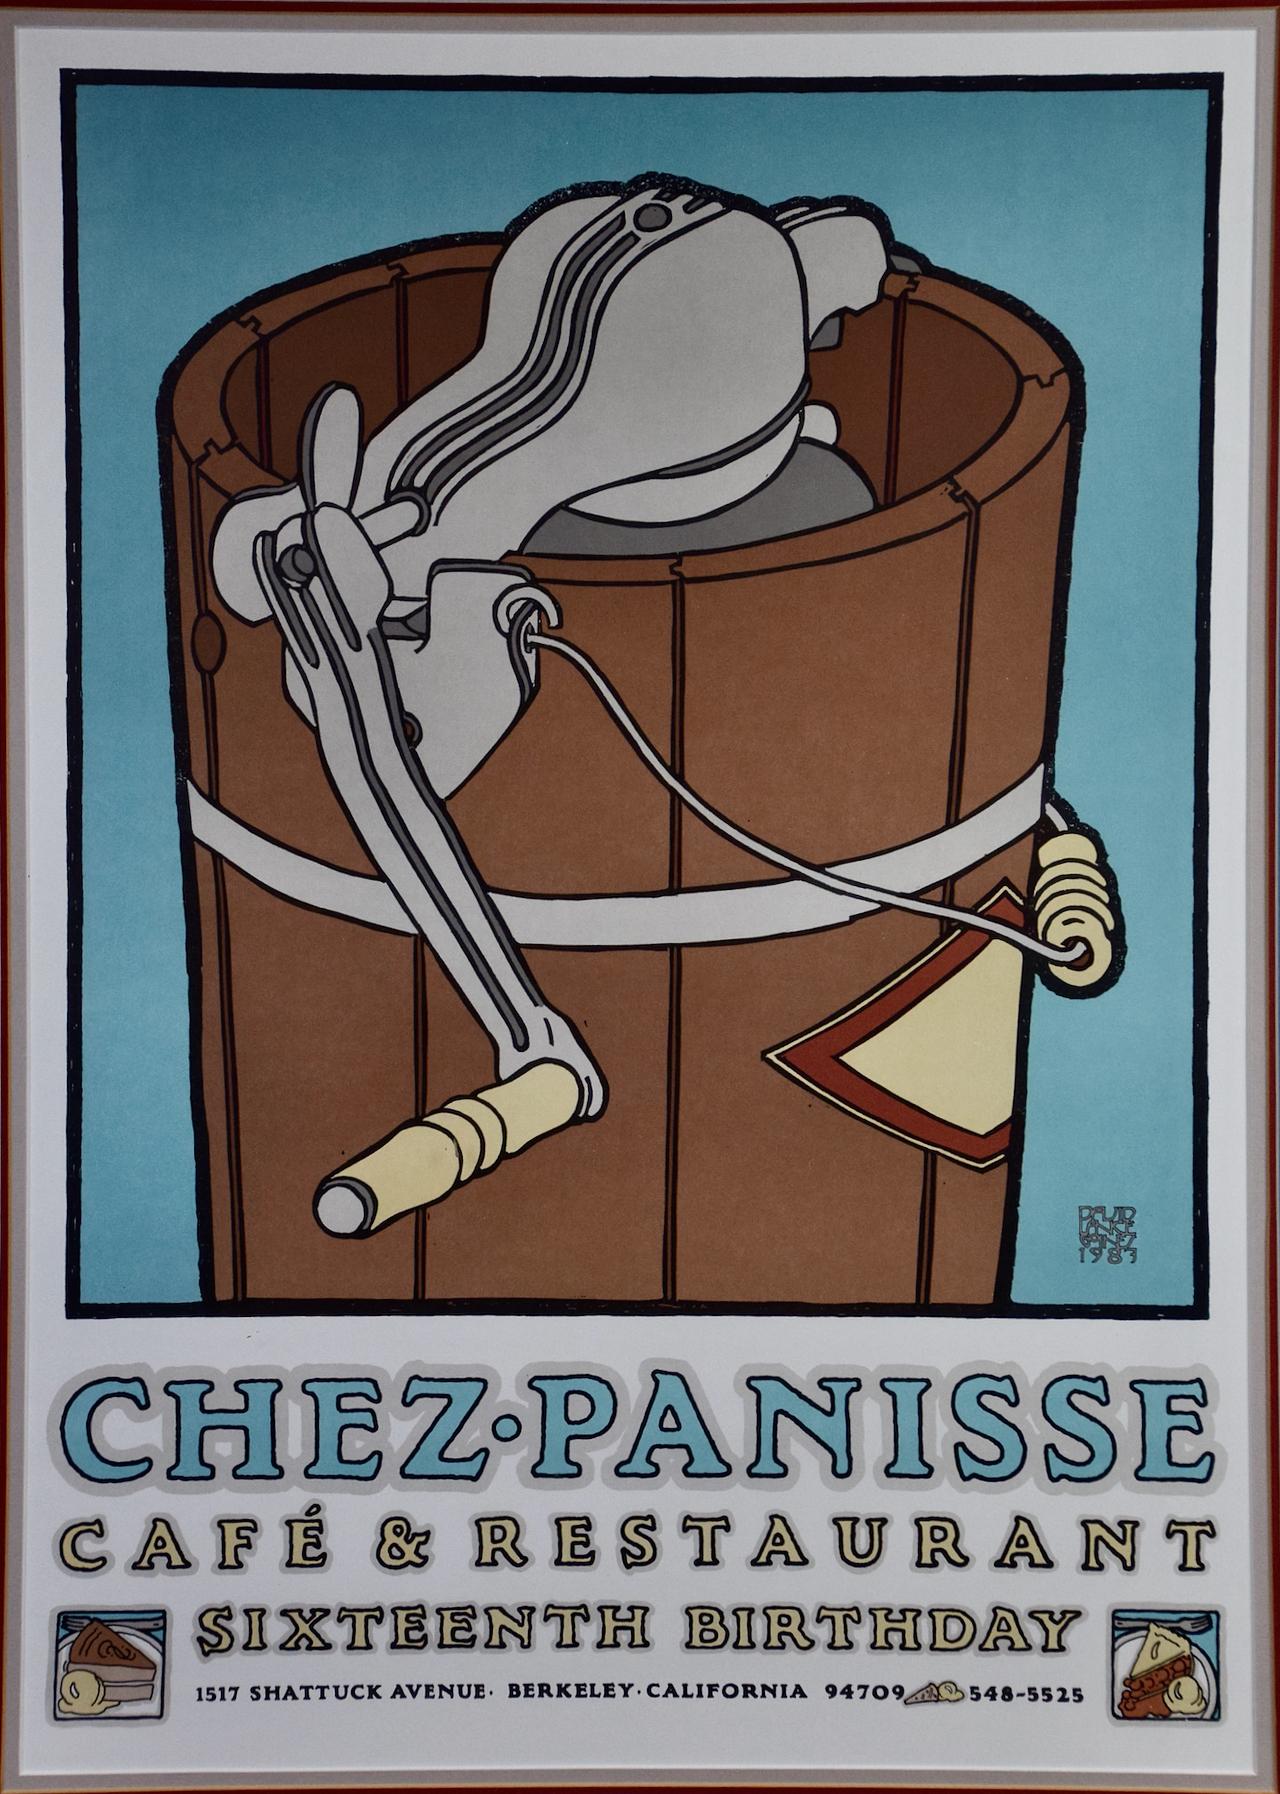 Chez Panisse Restaurant Birthday Celebration: Original Goines Graphic Art Poster - Print by David Lance Goines